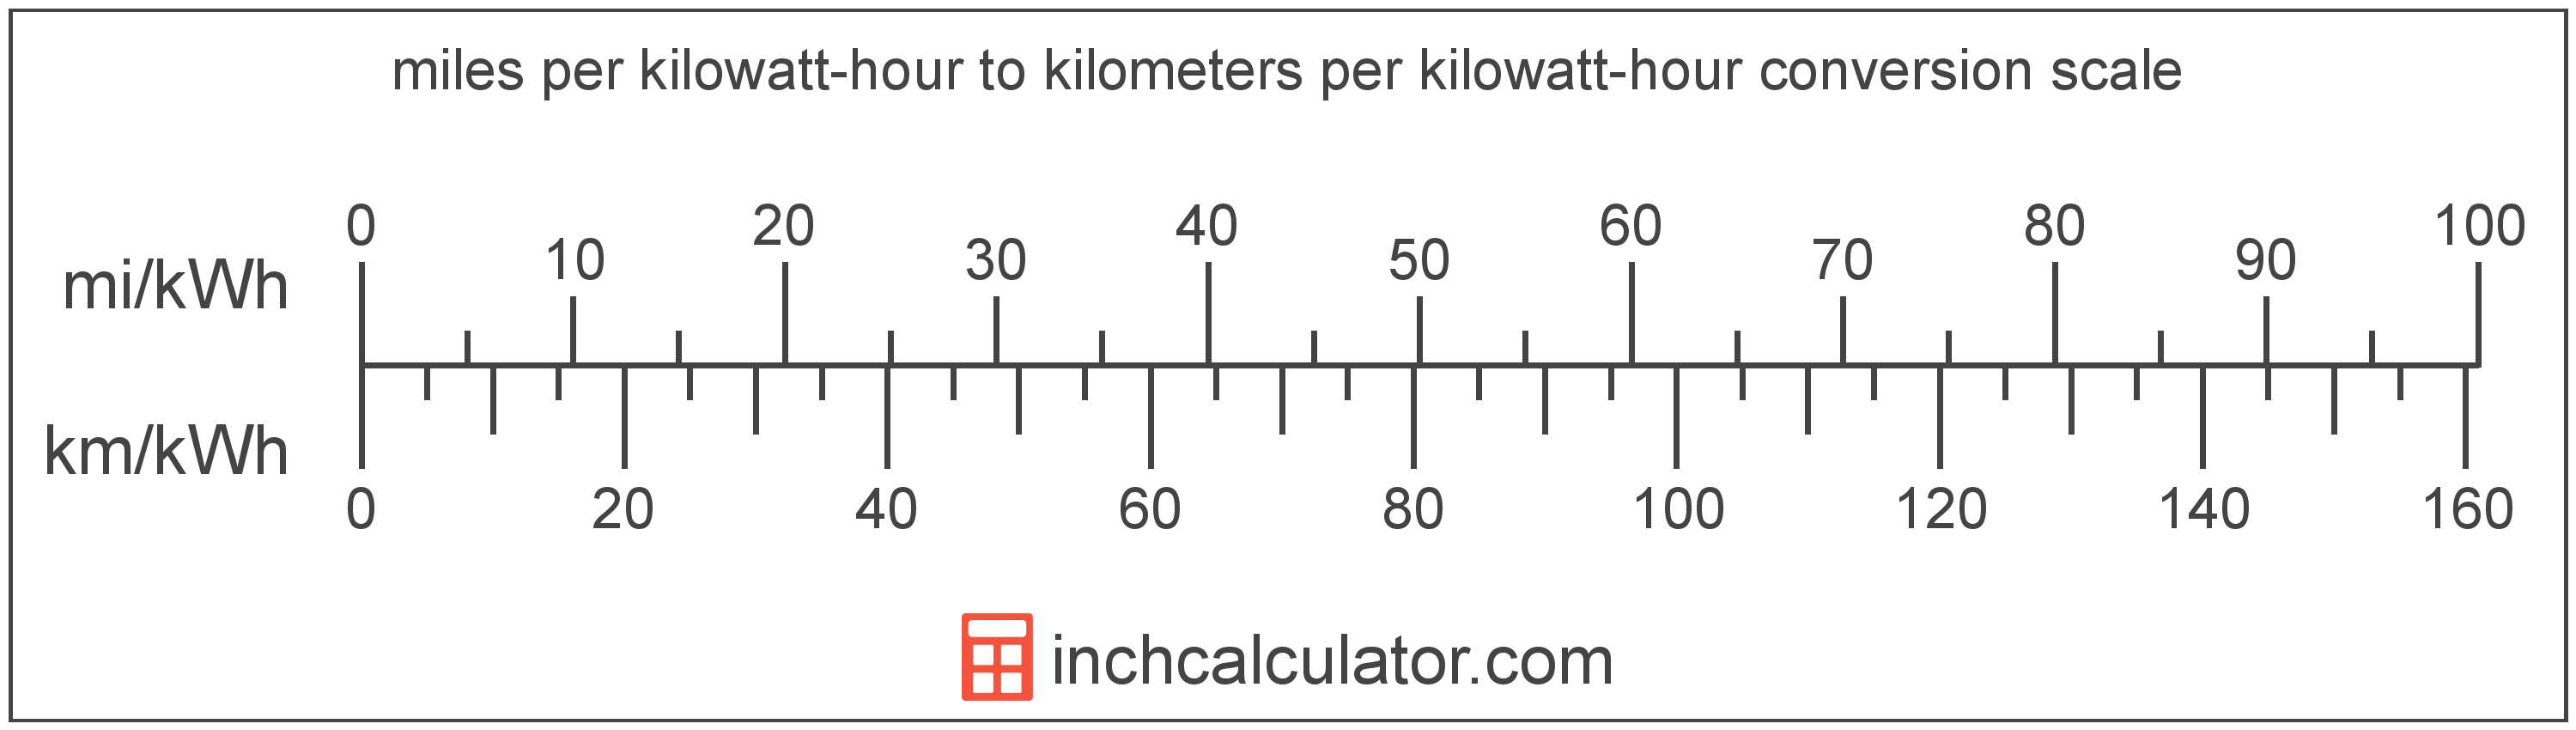 conversion scale showing kilometers per kilowatt-hour and equivalent miles per kilowatt-hour electric car efficiency values